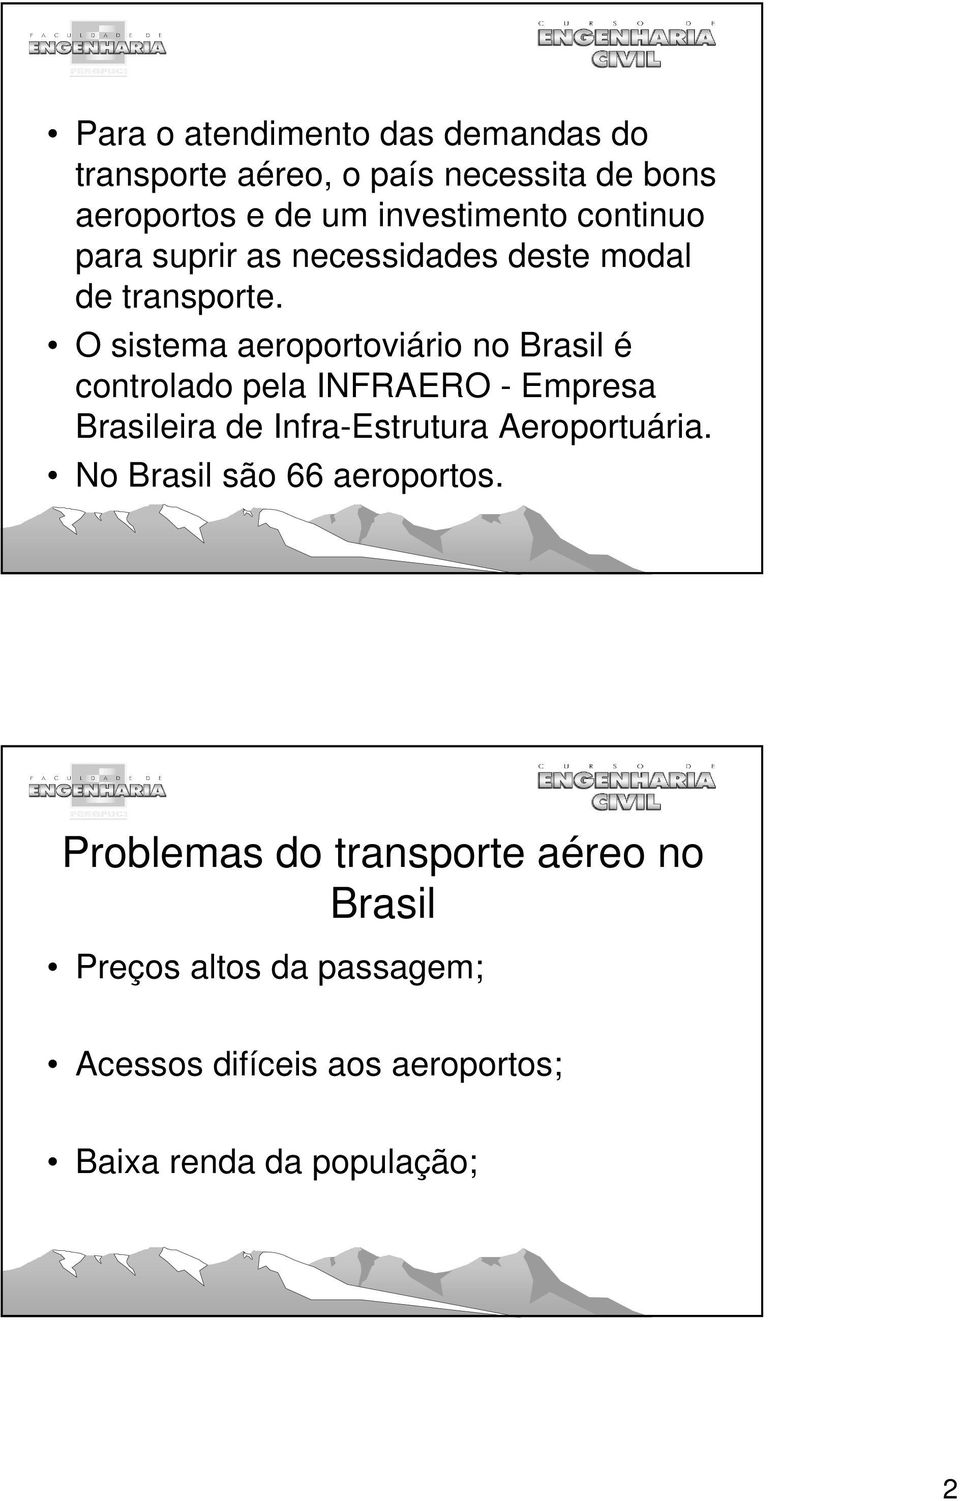 O sistema aeroportoviário no Brasil é controlado pela INFRAERO - Empresa Brasileira de Infra-Estrutura